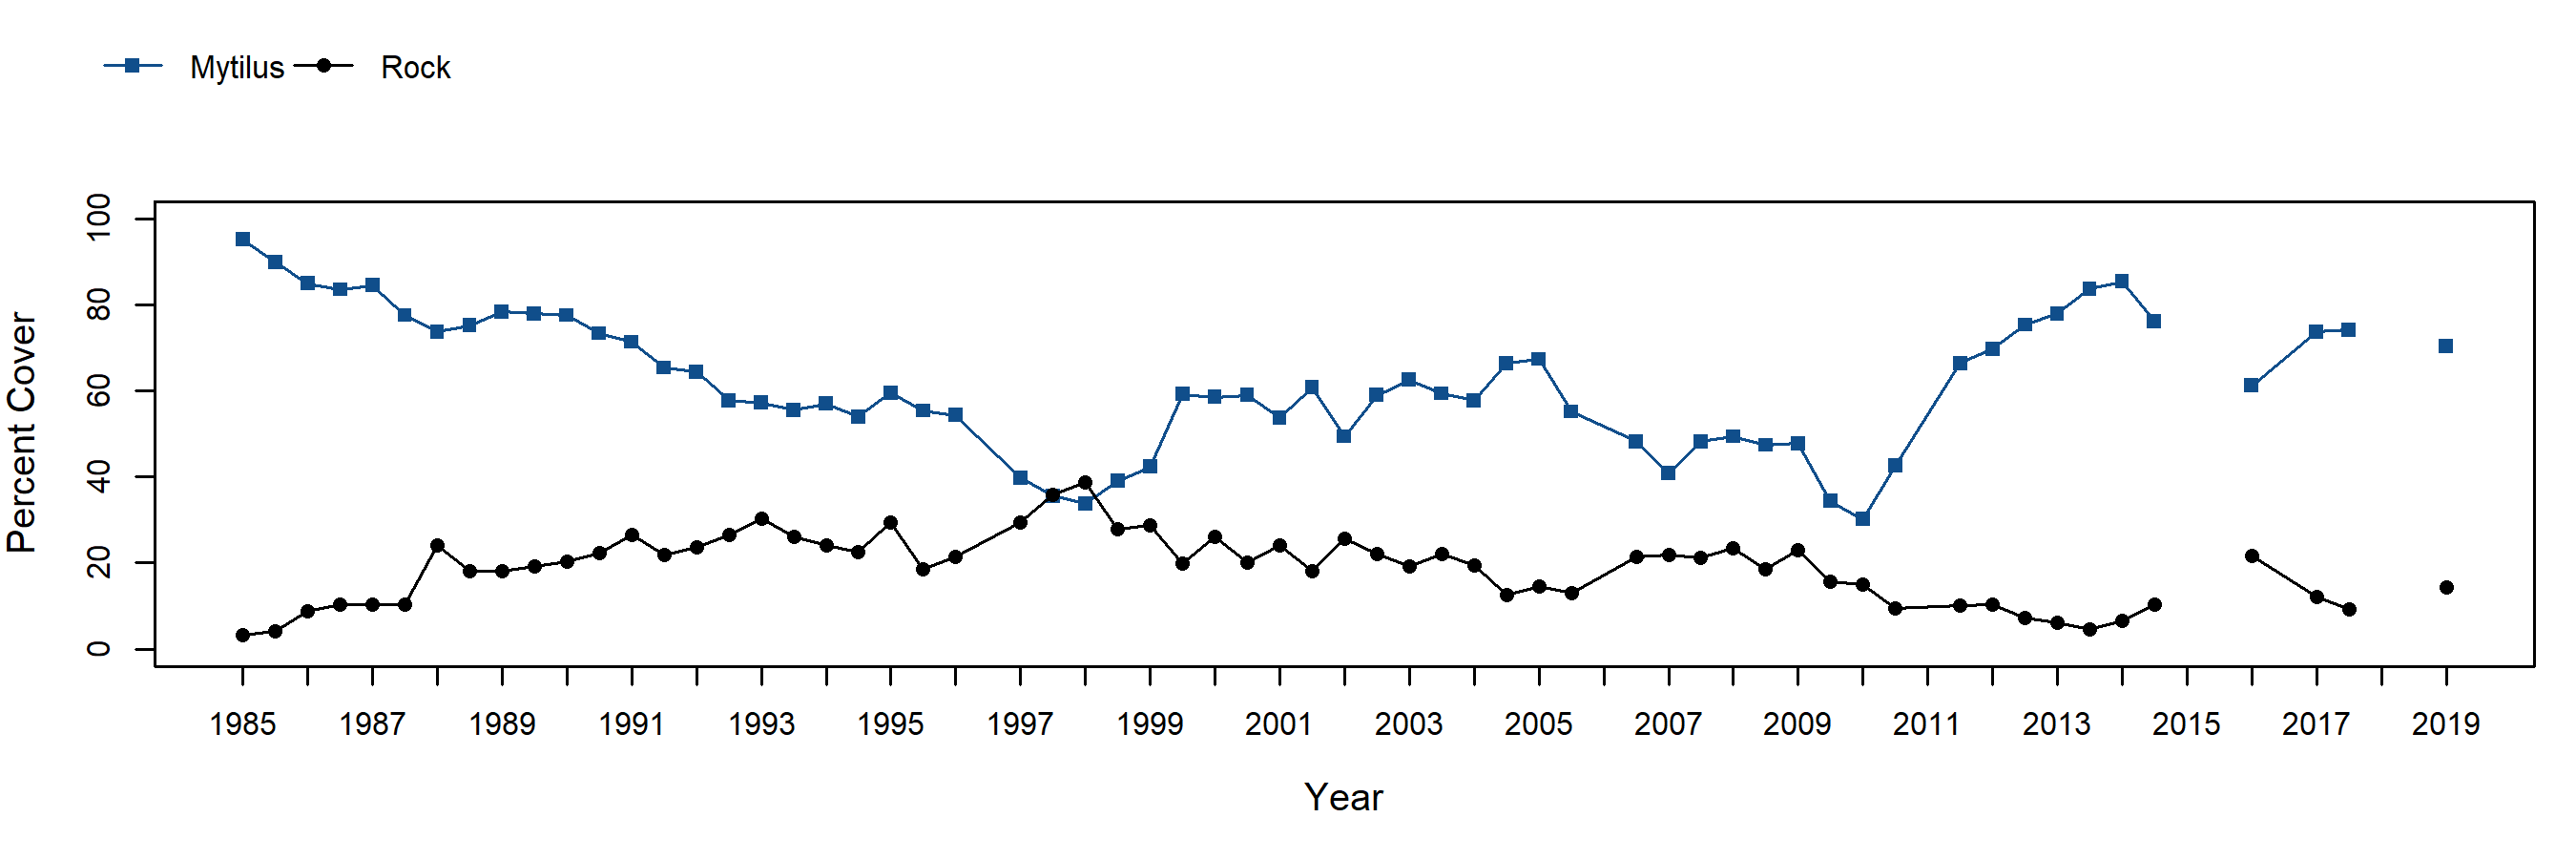 Cuyler Harbor Mytilus trend plot